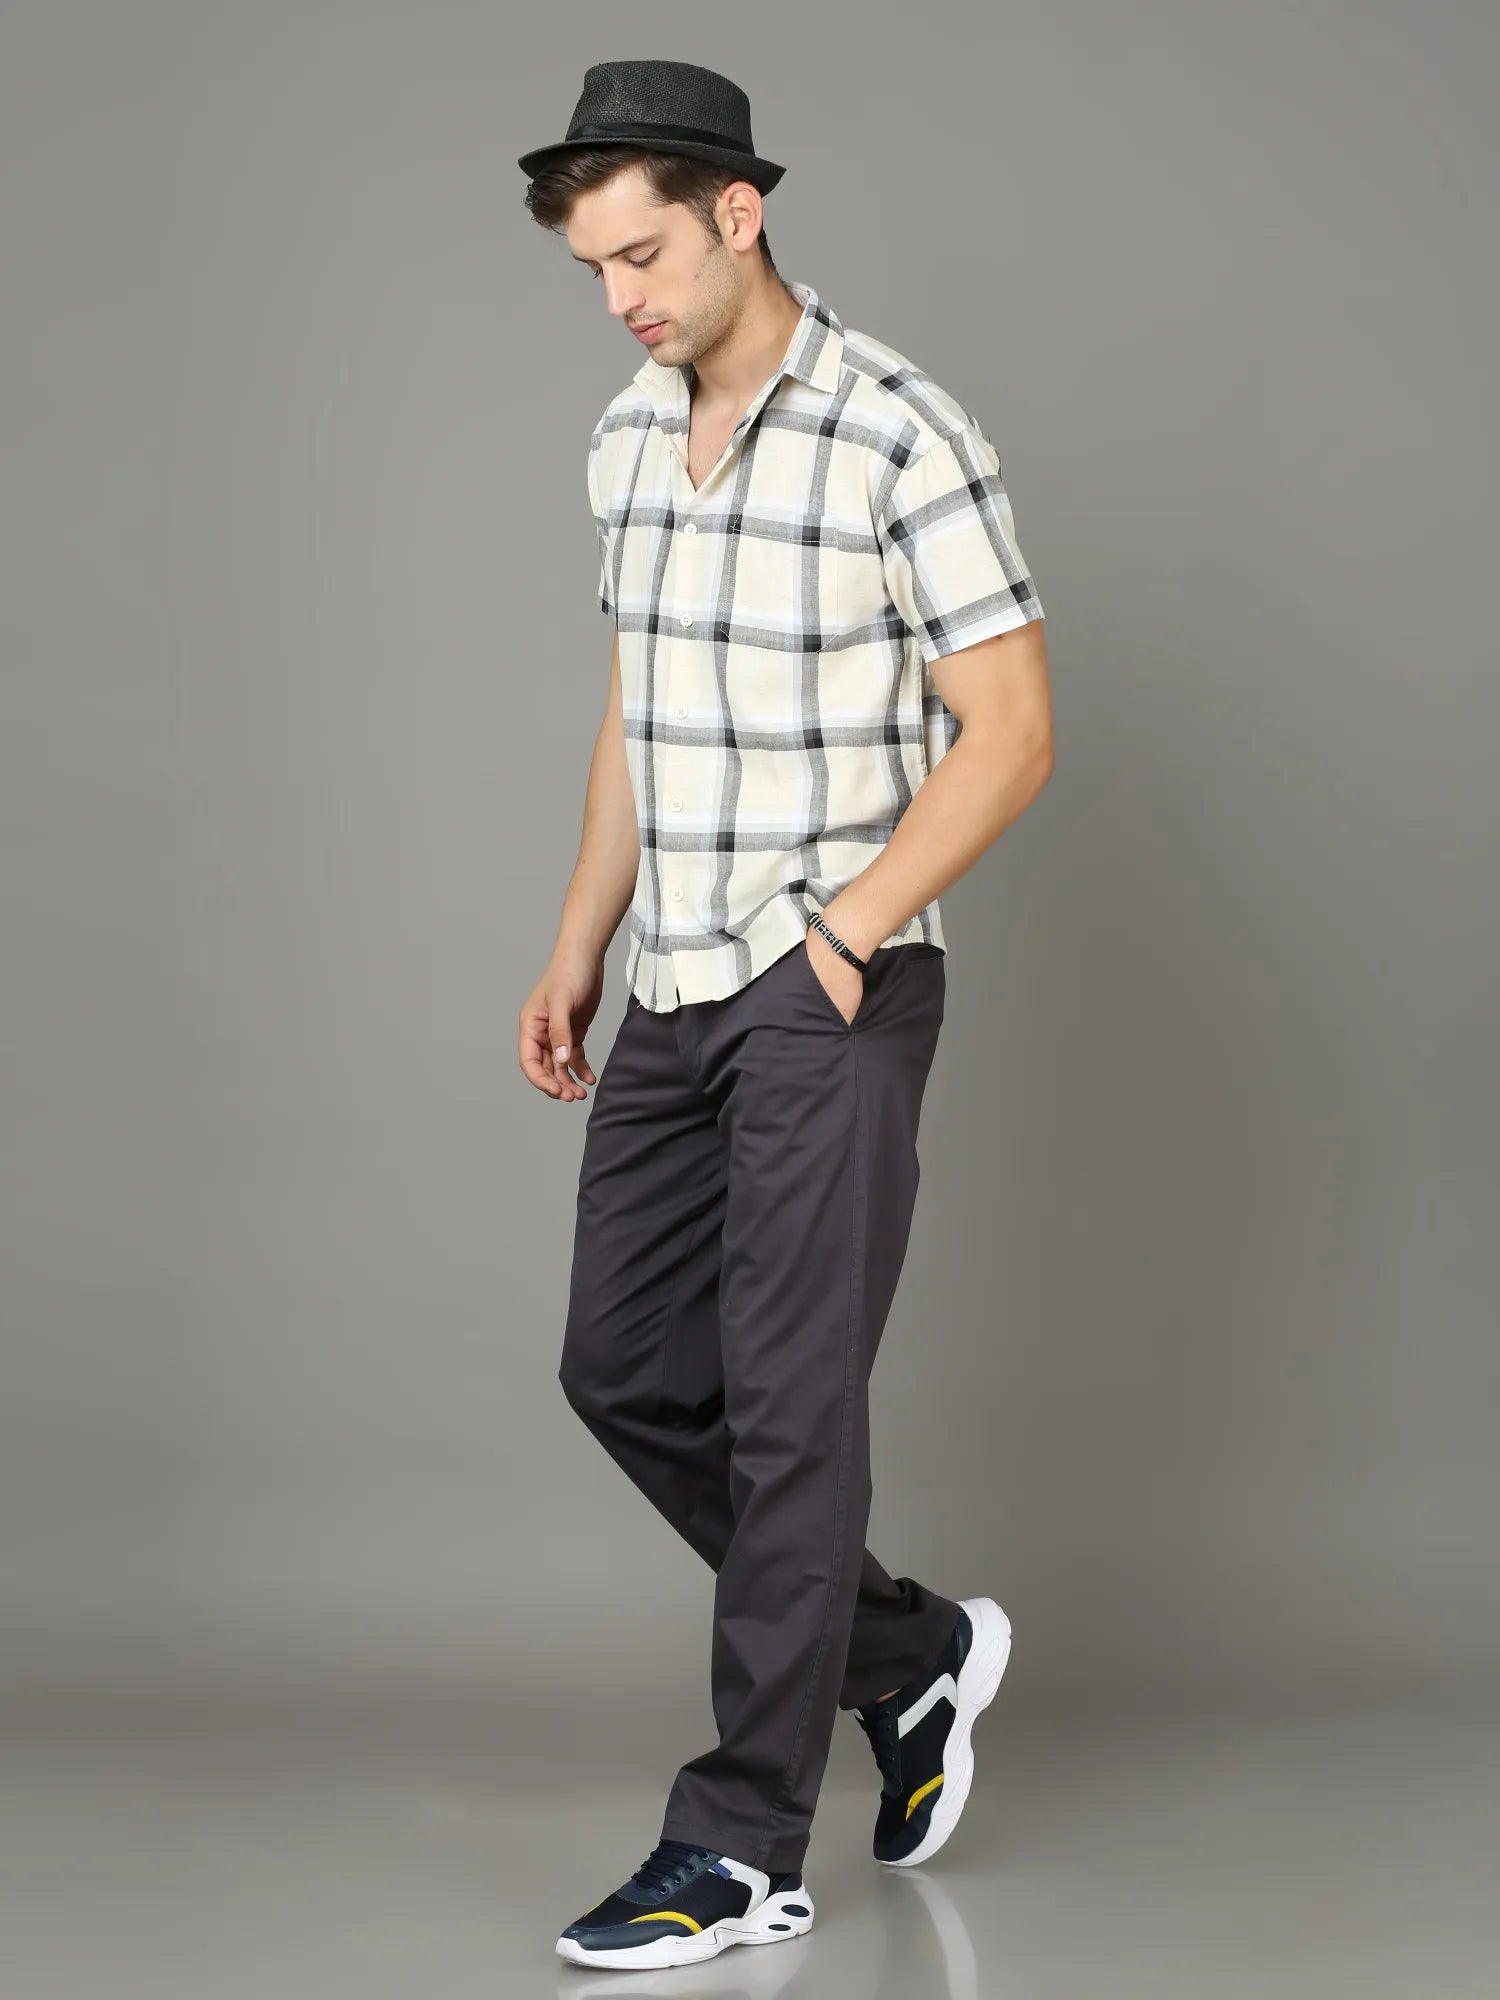 Versatile Grey Checkered Style shirt for Men 